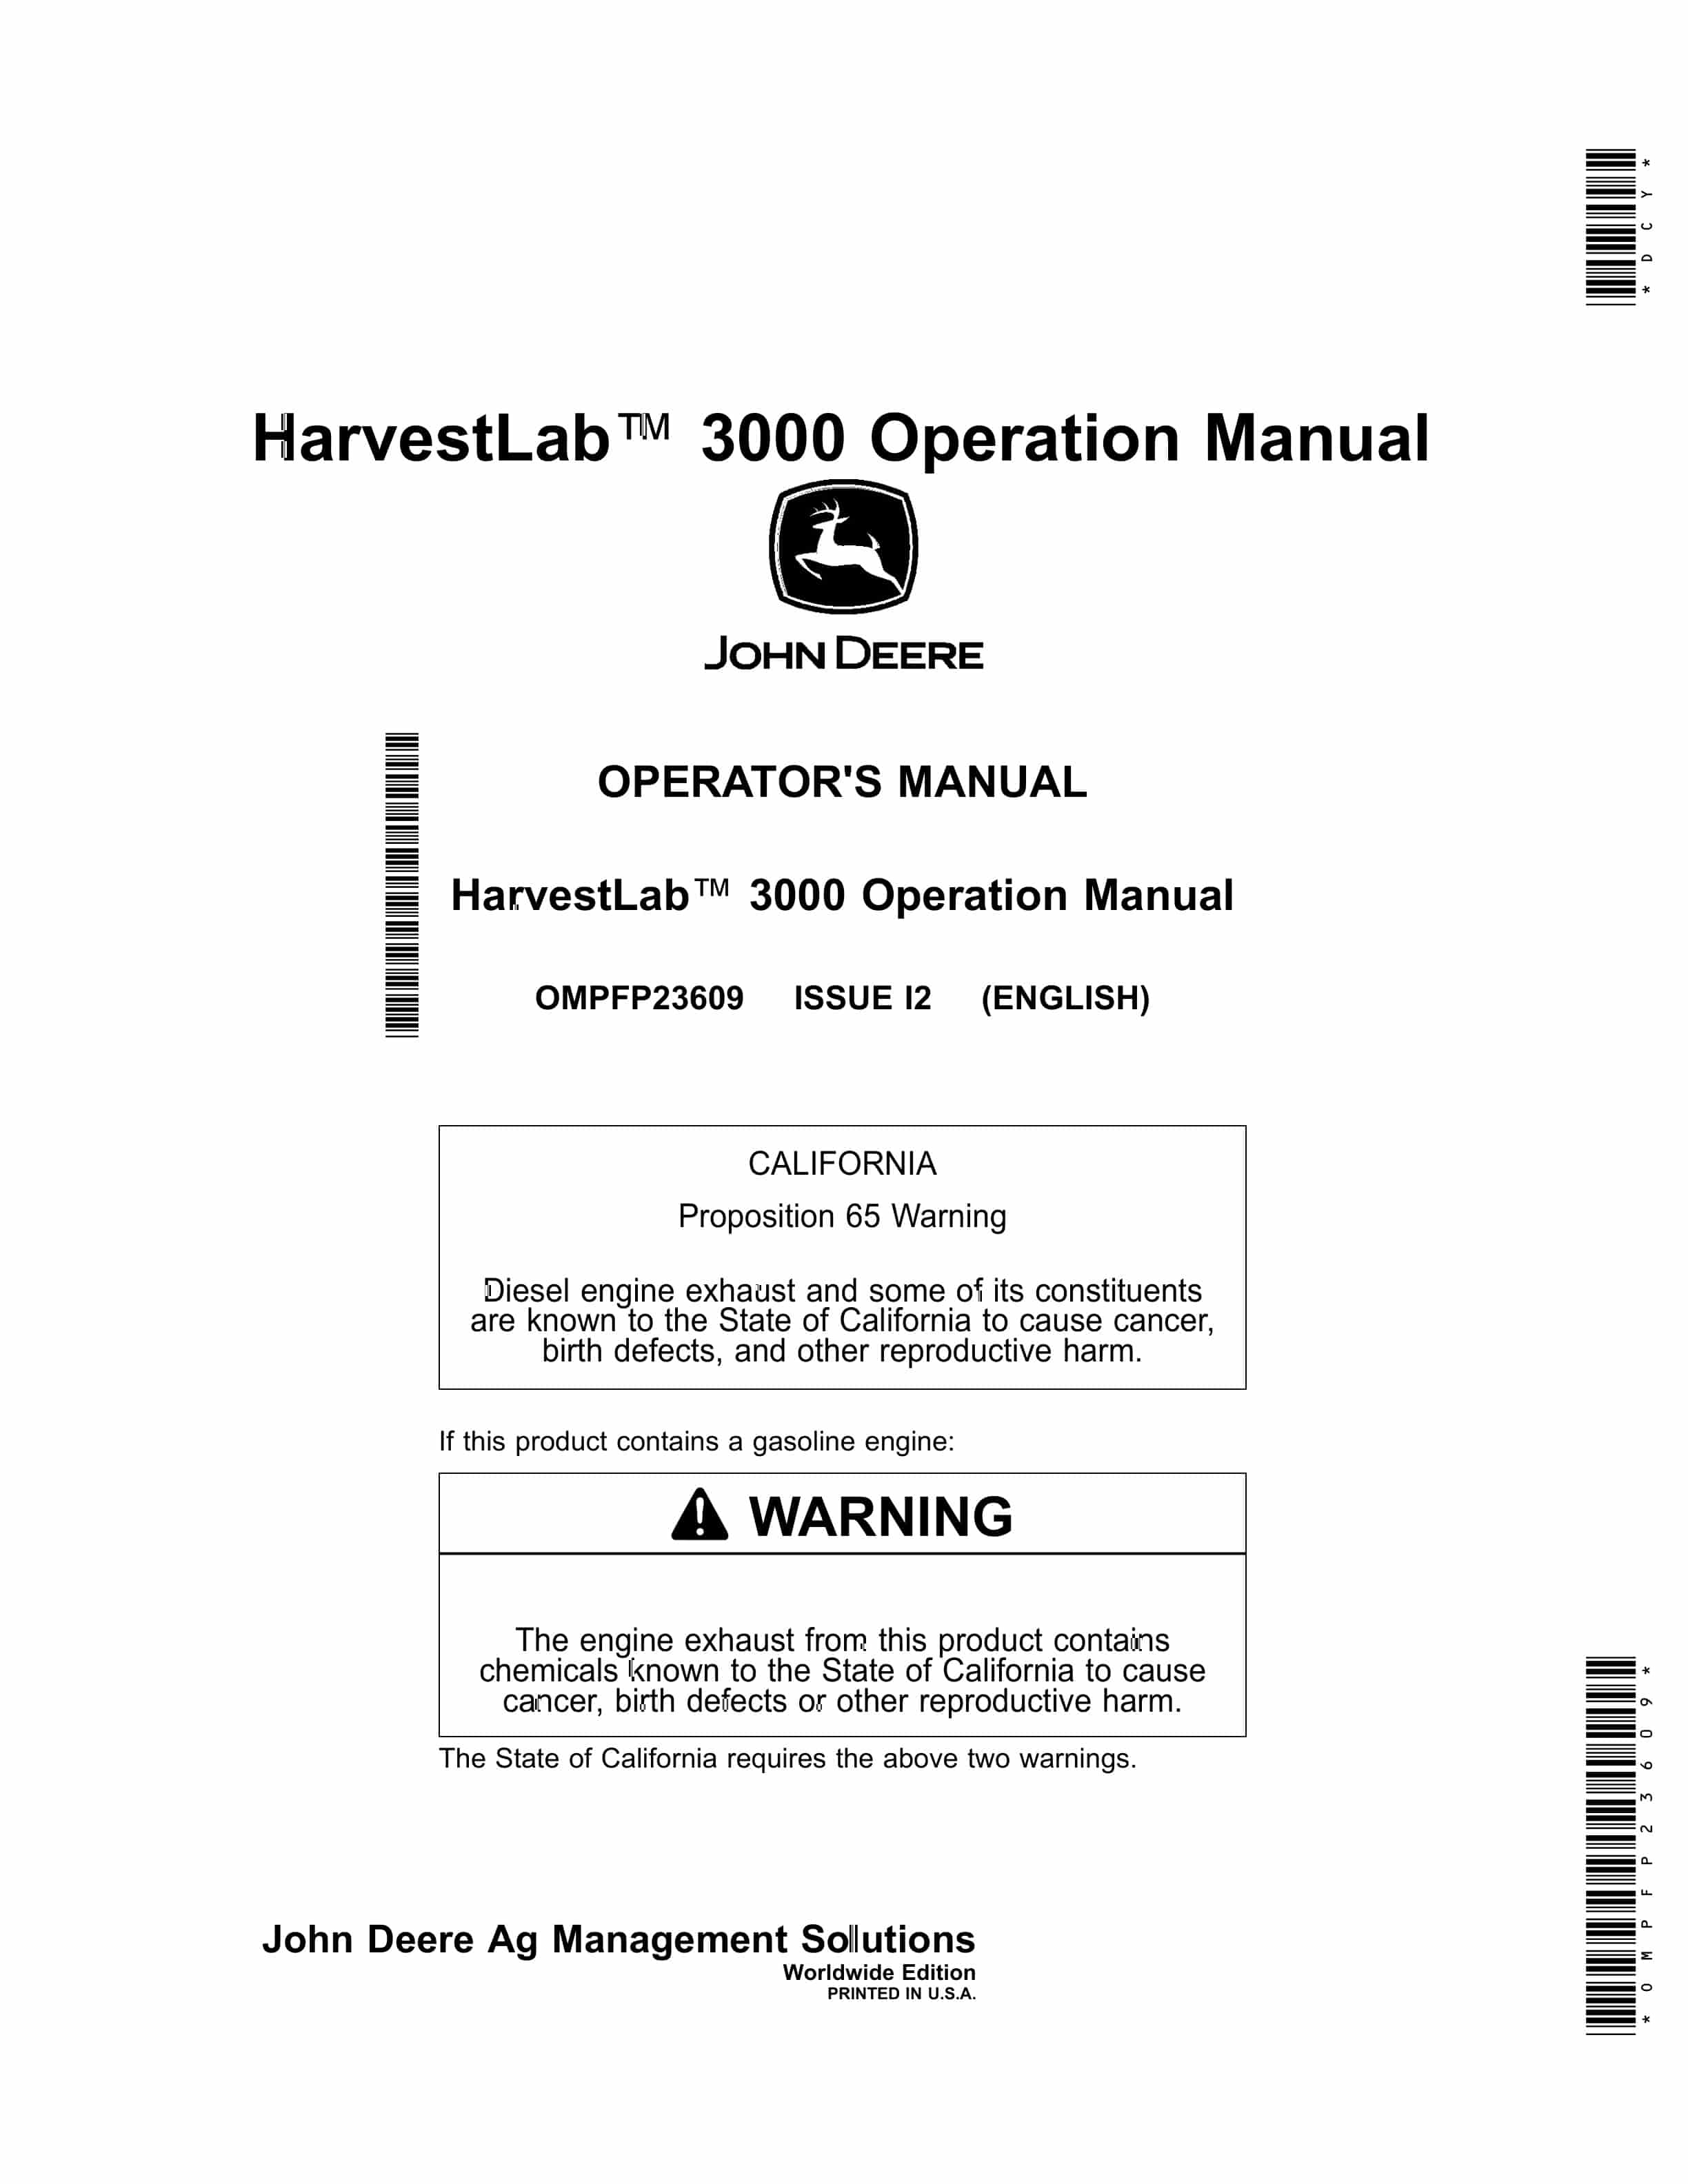 John Deere HarvestLab 3000 Operator Manual OMPFP23609 1